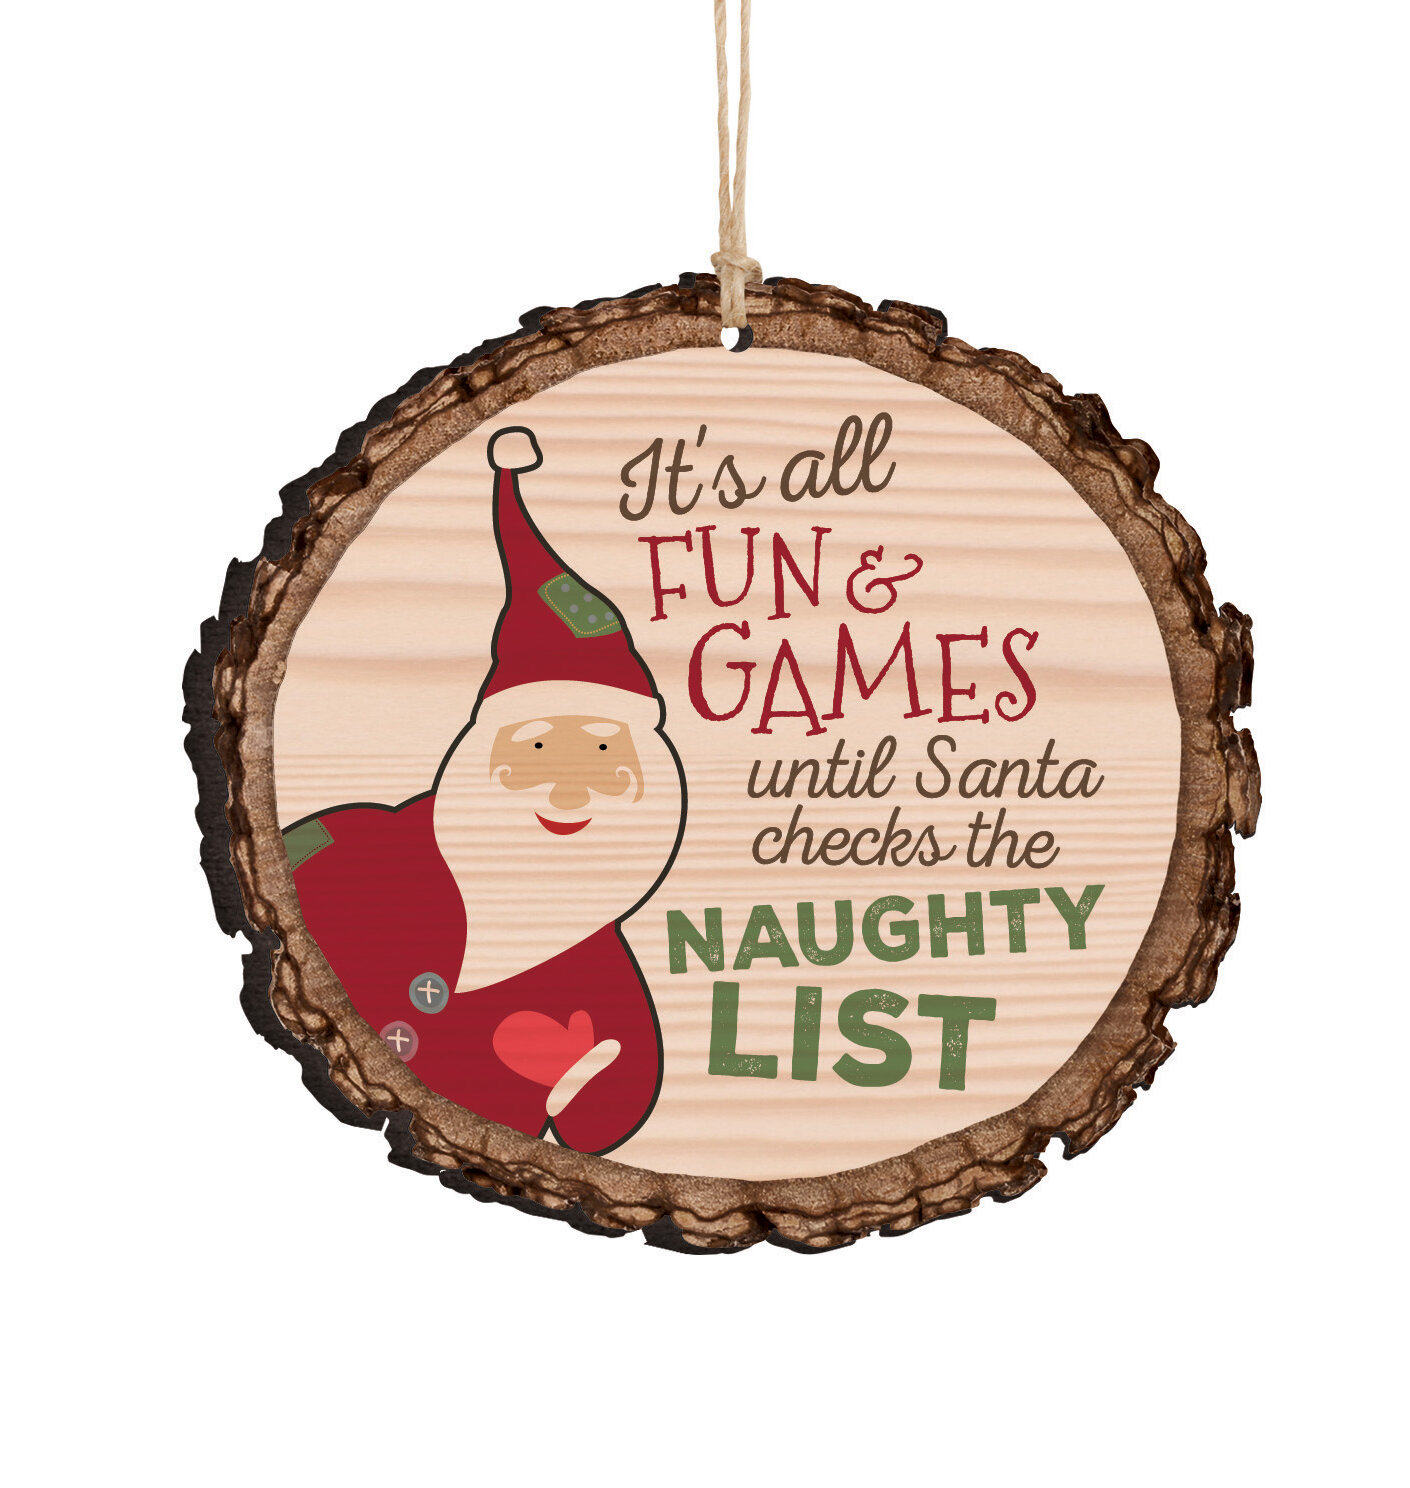 Be Naughty Save Santa the Trip Christmas Printed Handmade Wood Sign